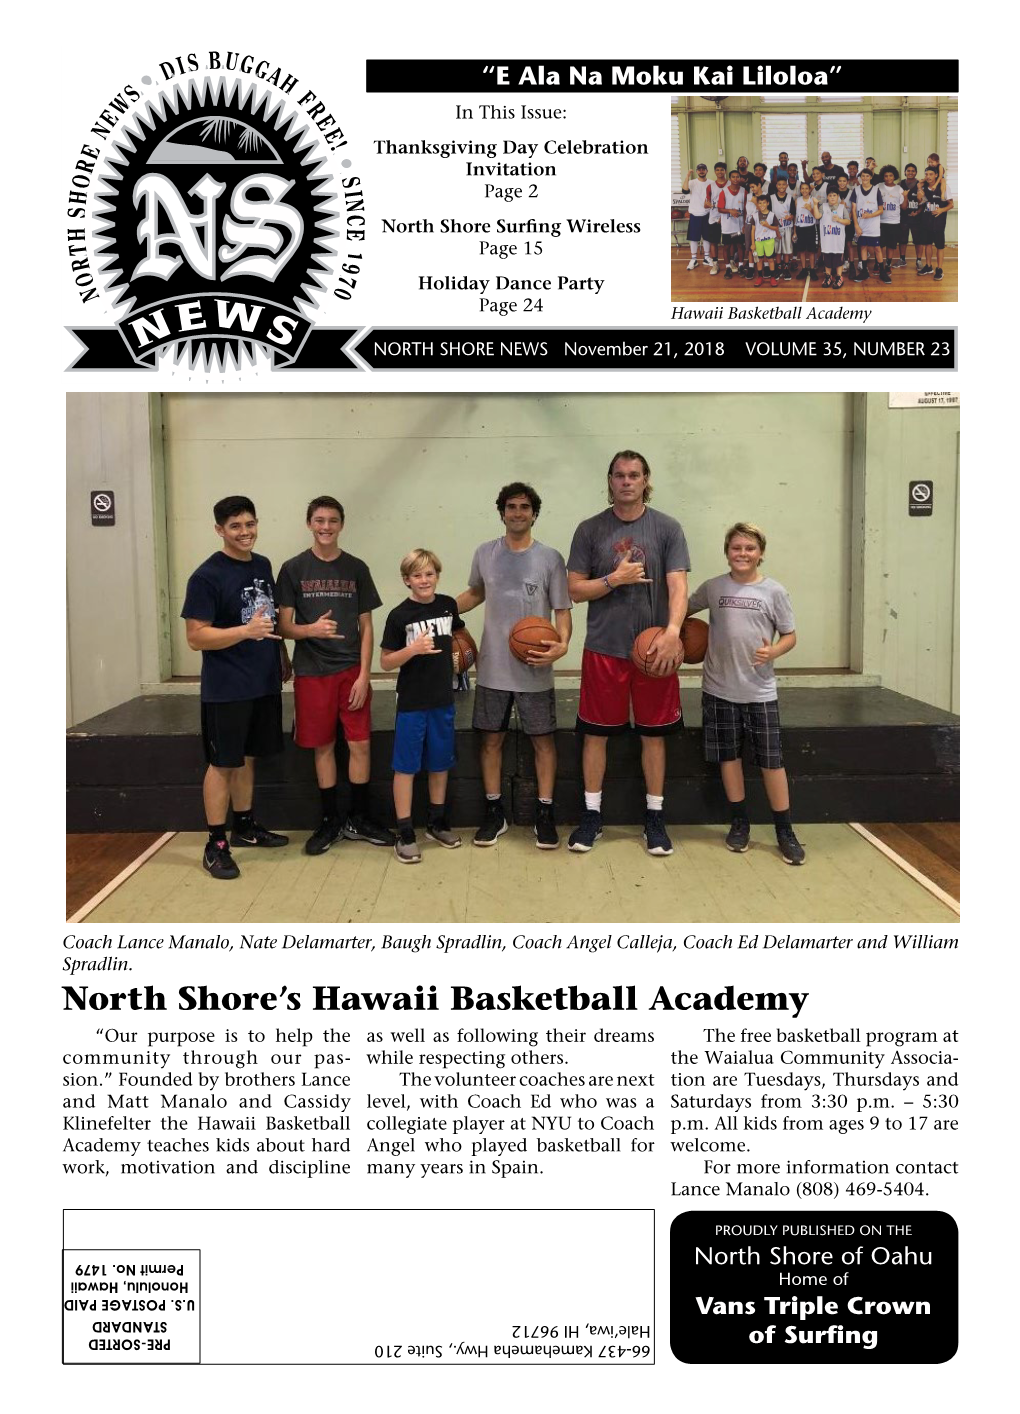 North Shore's Hawaii Basketball Academy